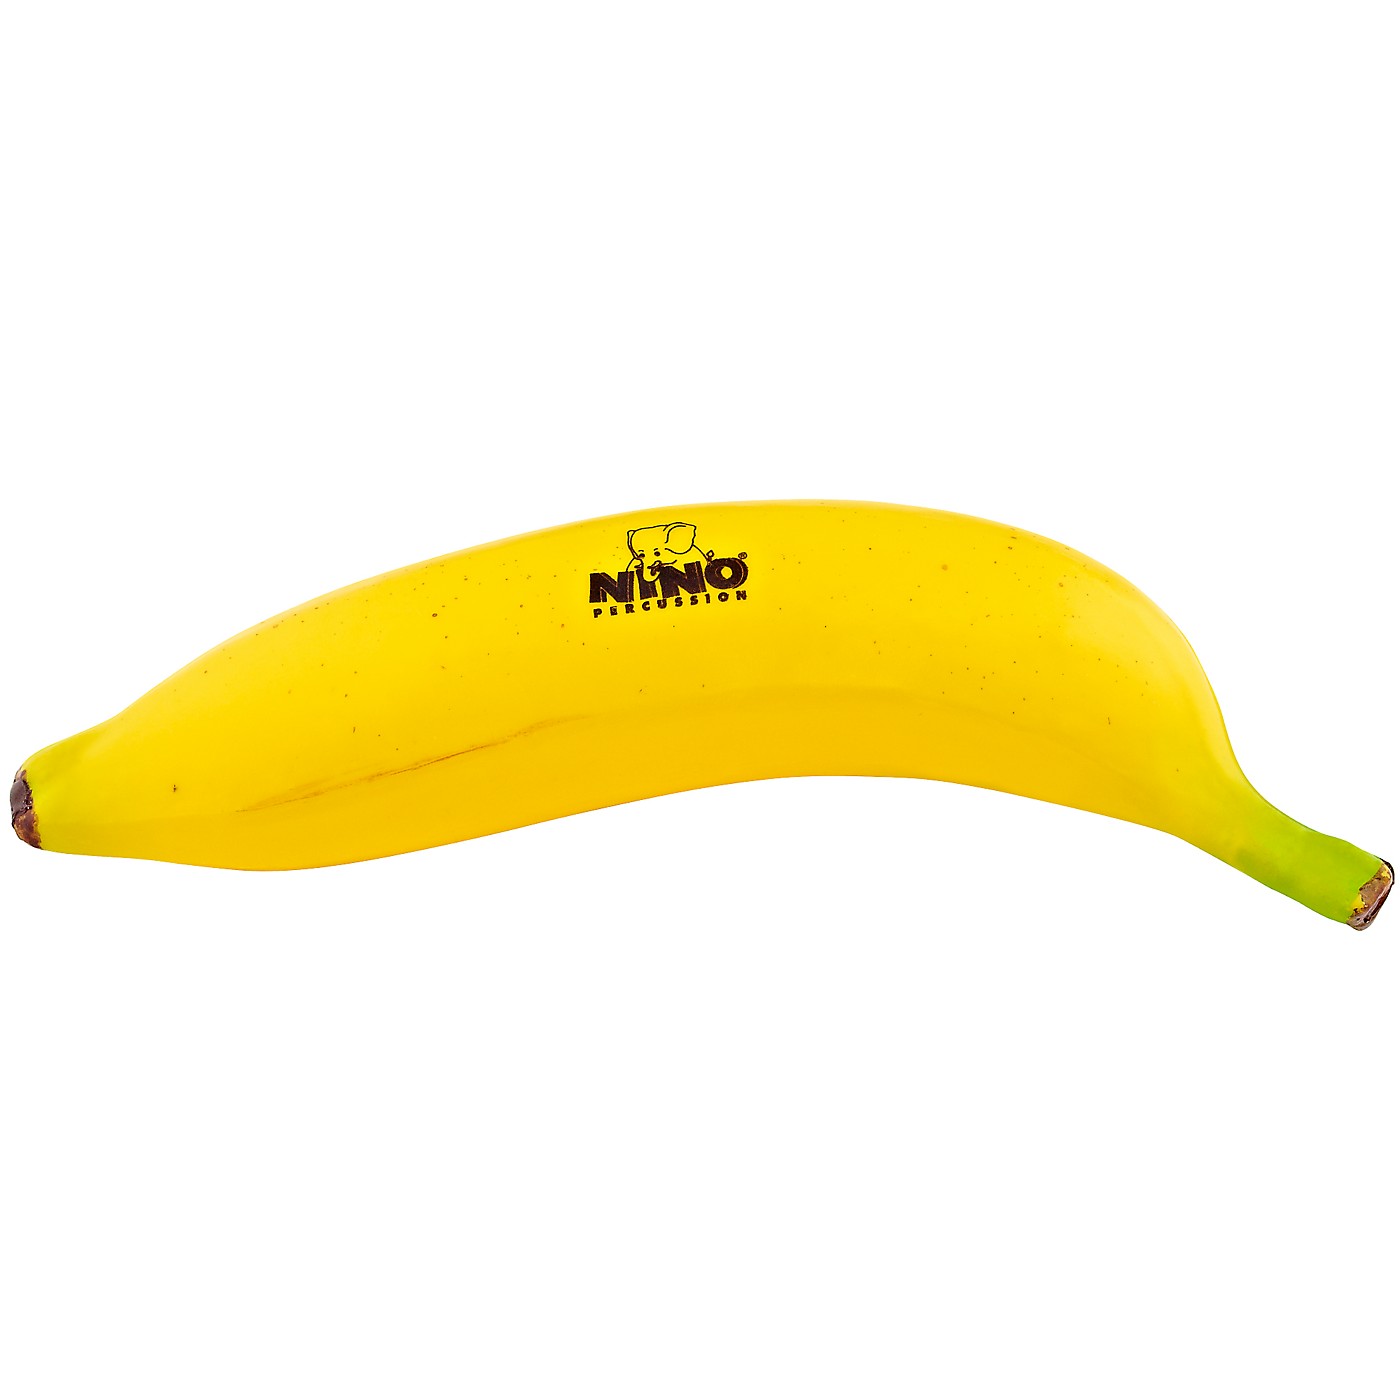 Nino Fruit Shaker Banana thumbnail